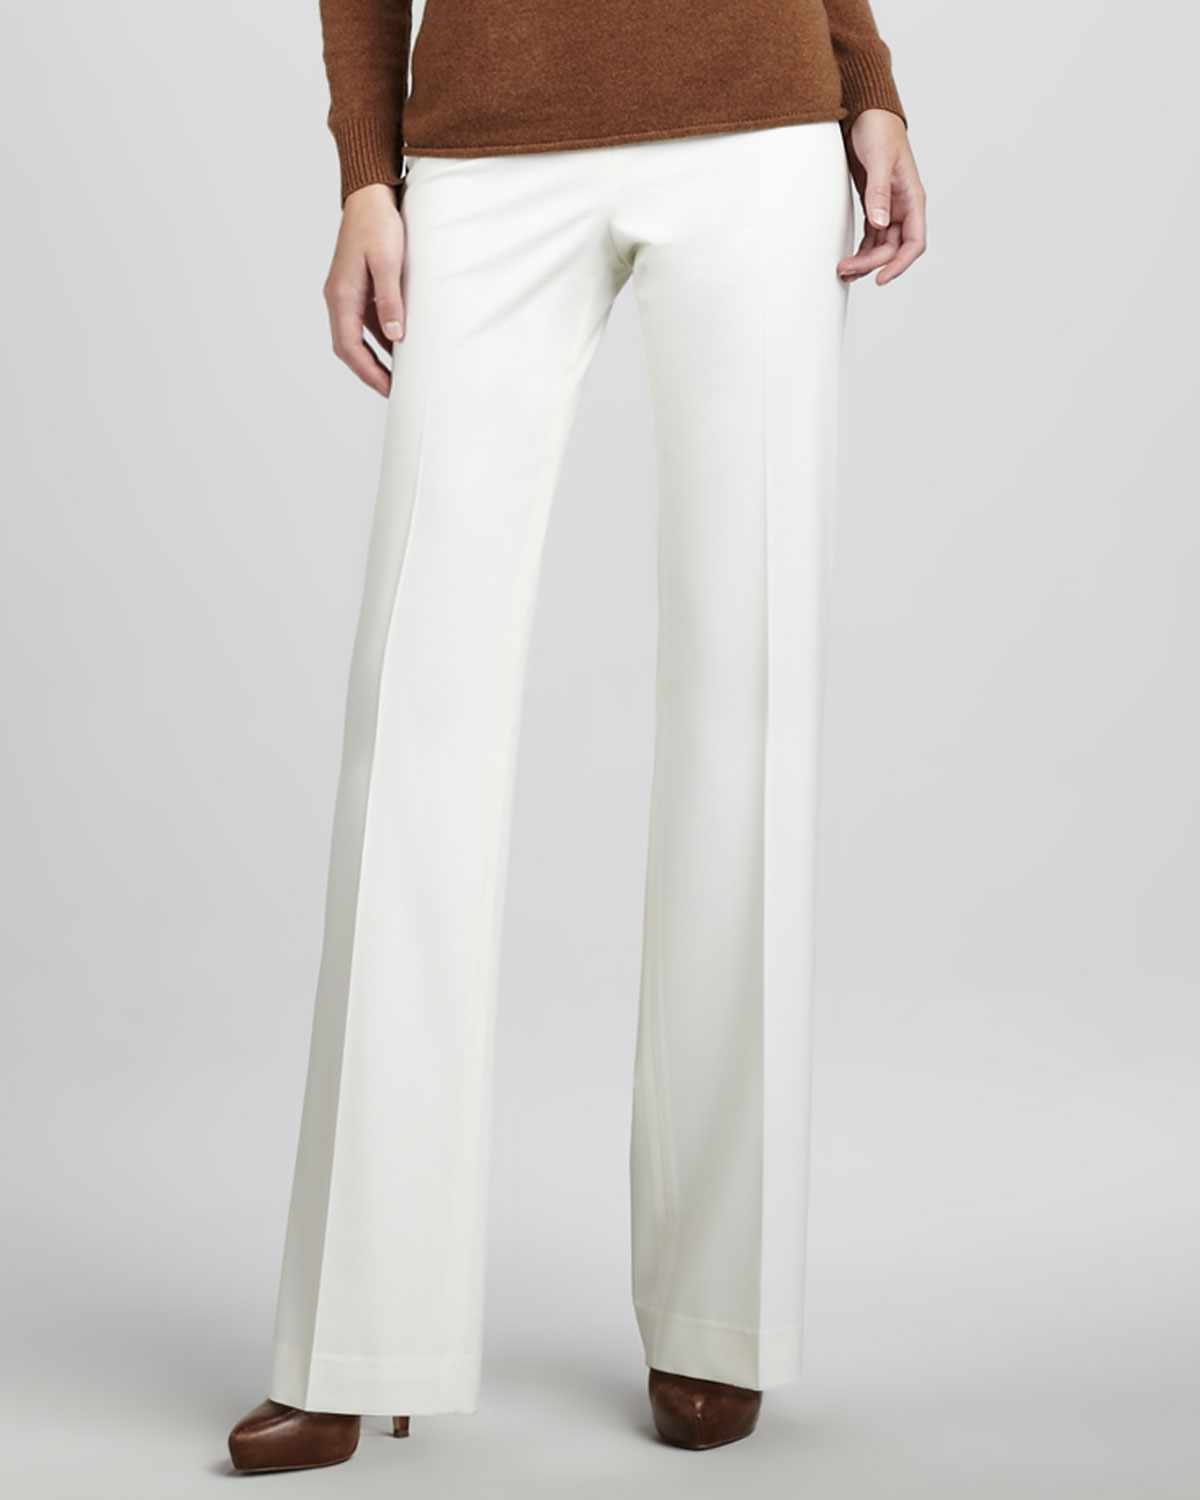 Lafayette 148 new york Womens Menswearstyle Pants Winter White in White | Lyst